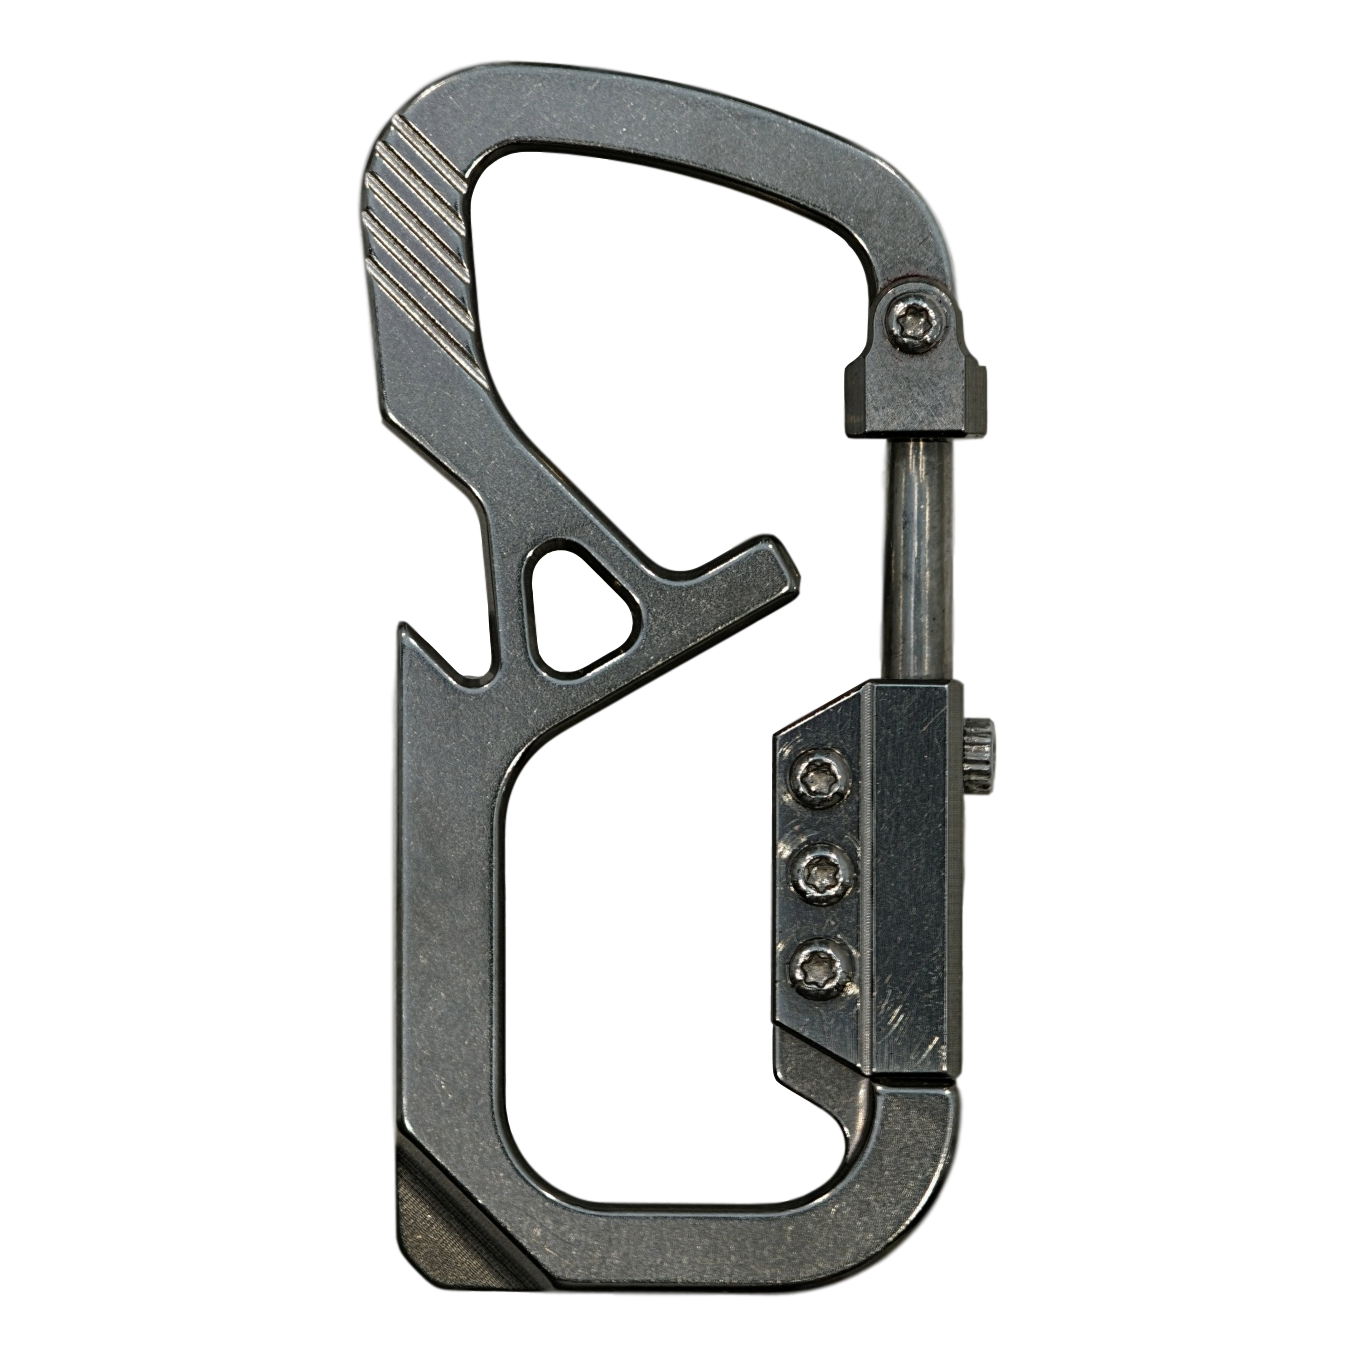 Valtcan Titanium Bolt Carabiner Key Chain Holder CyberCarabiner